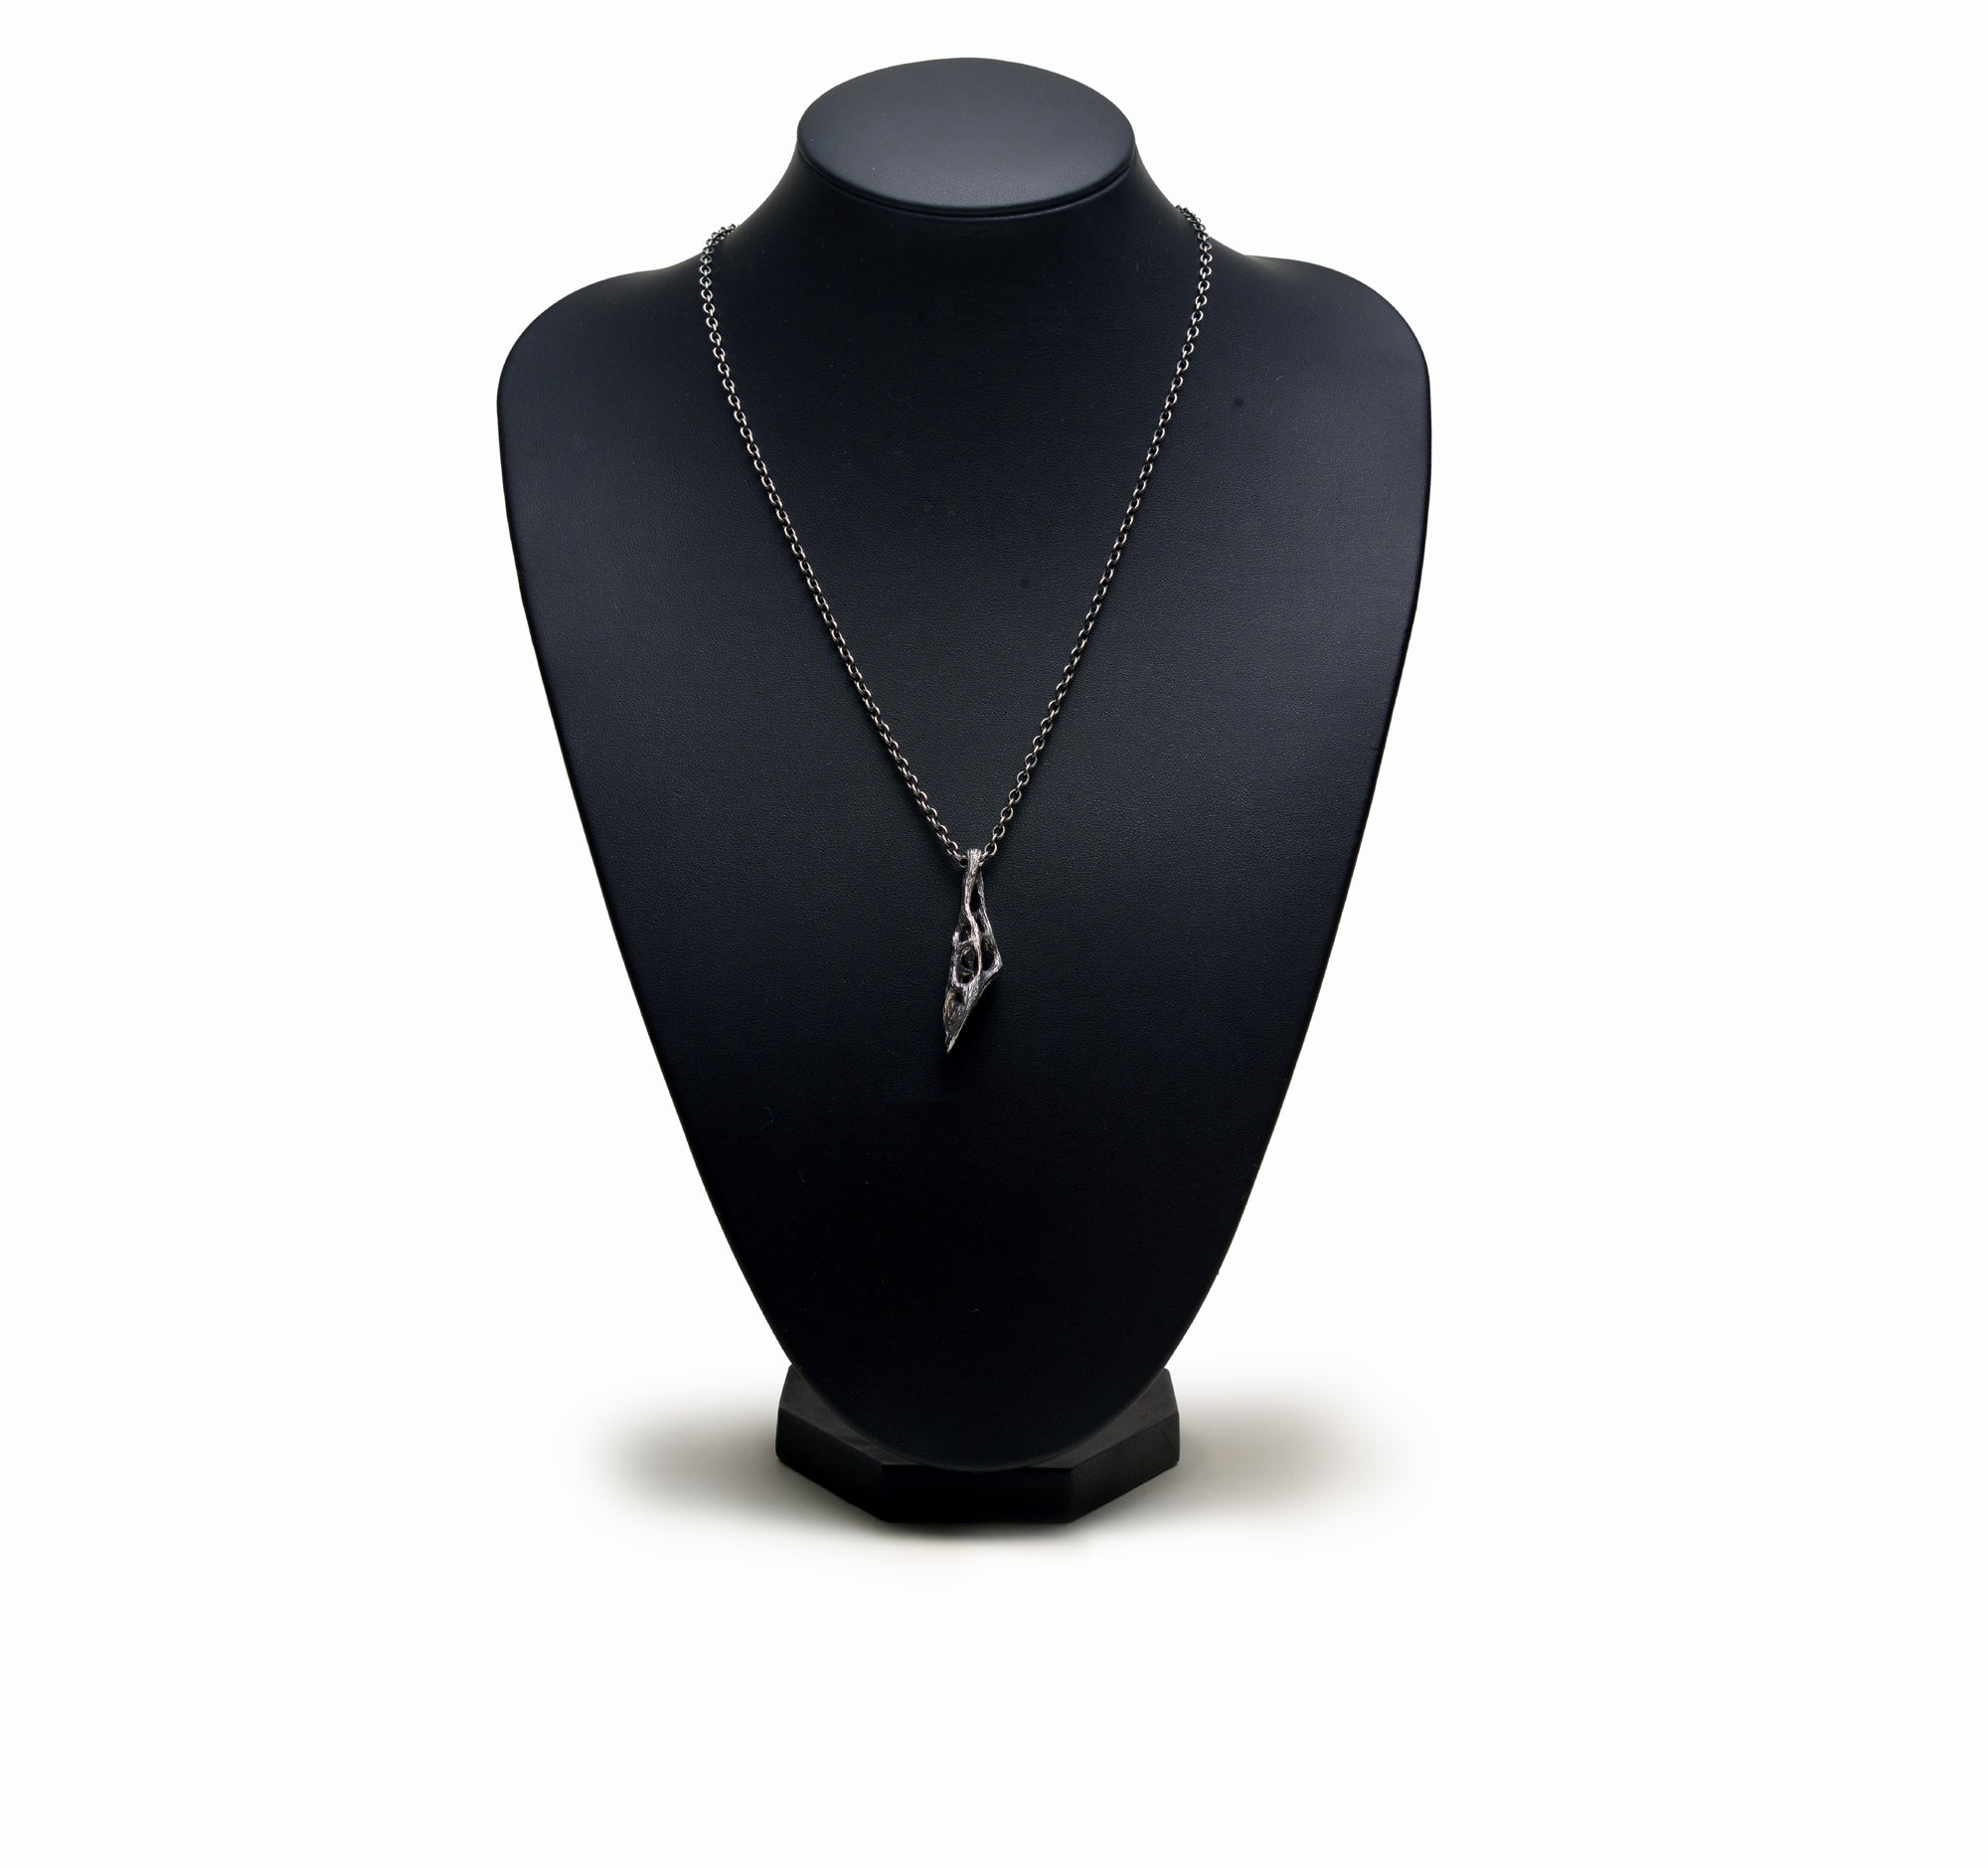 hollows - Silver necklace with original clasp - Avant Gardist